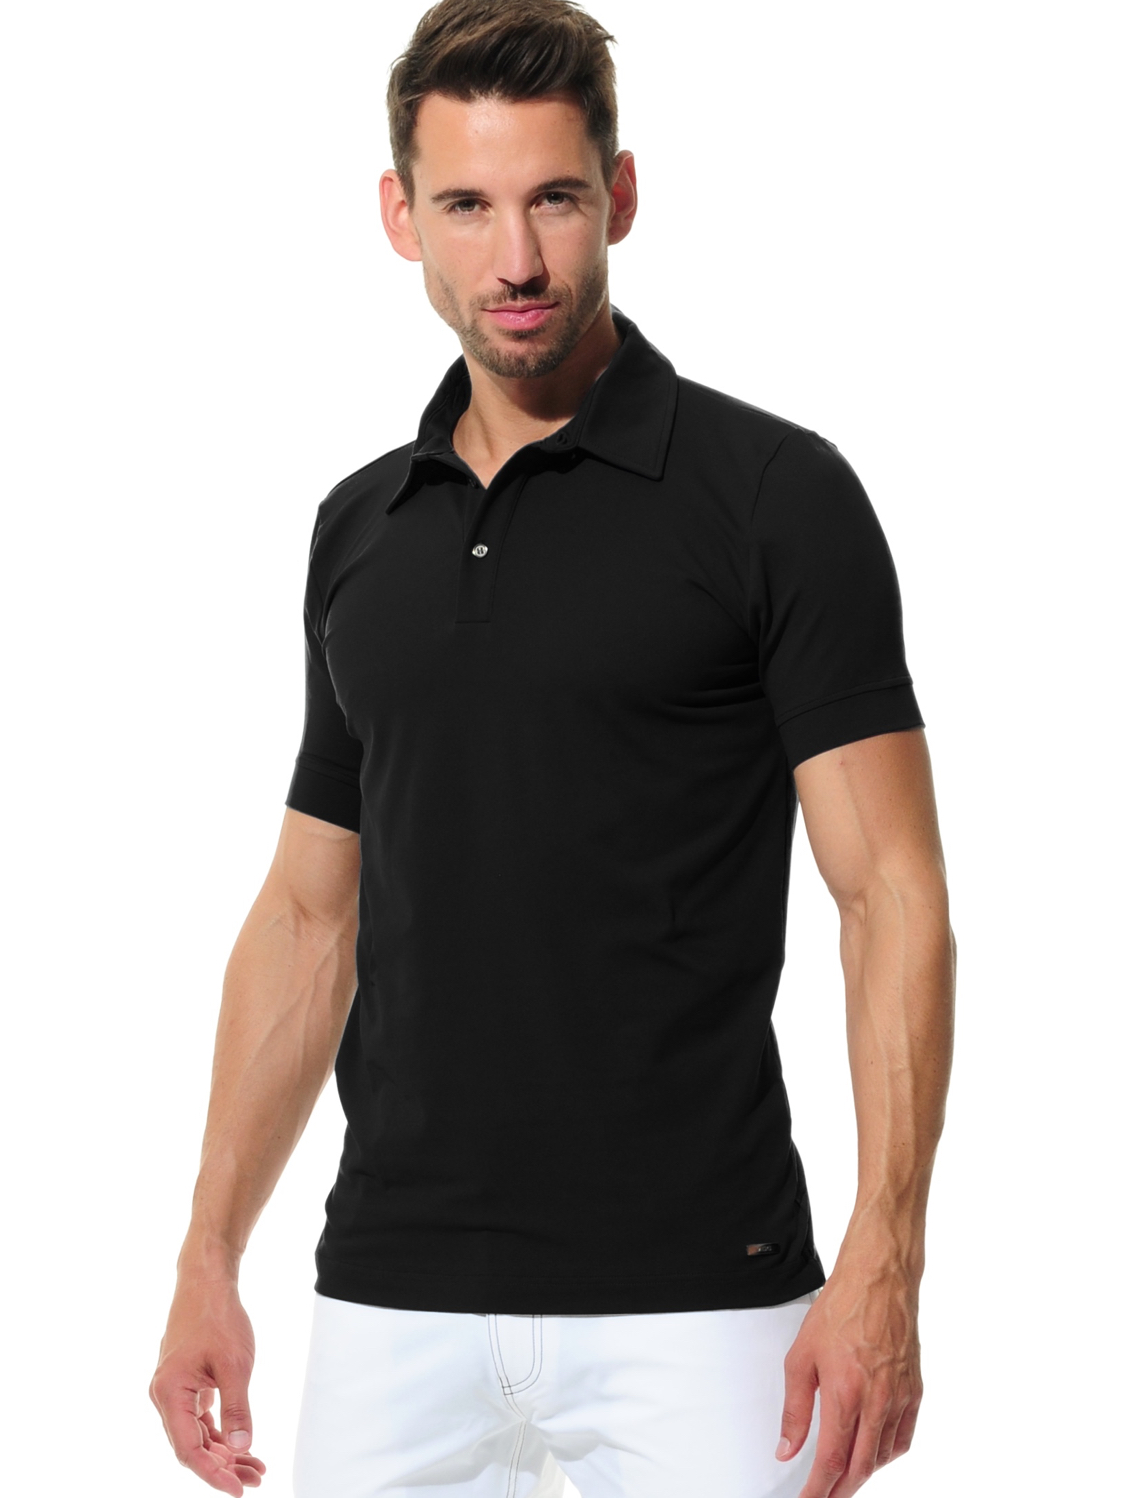 Jersey polo shirt black 